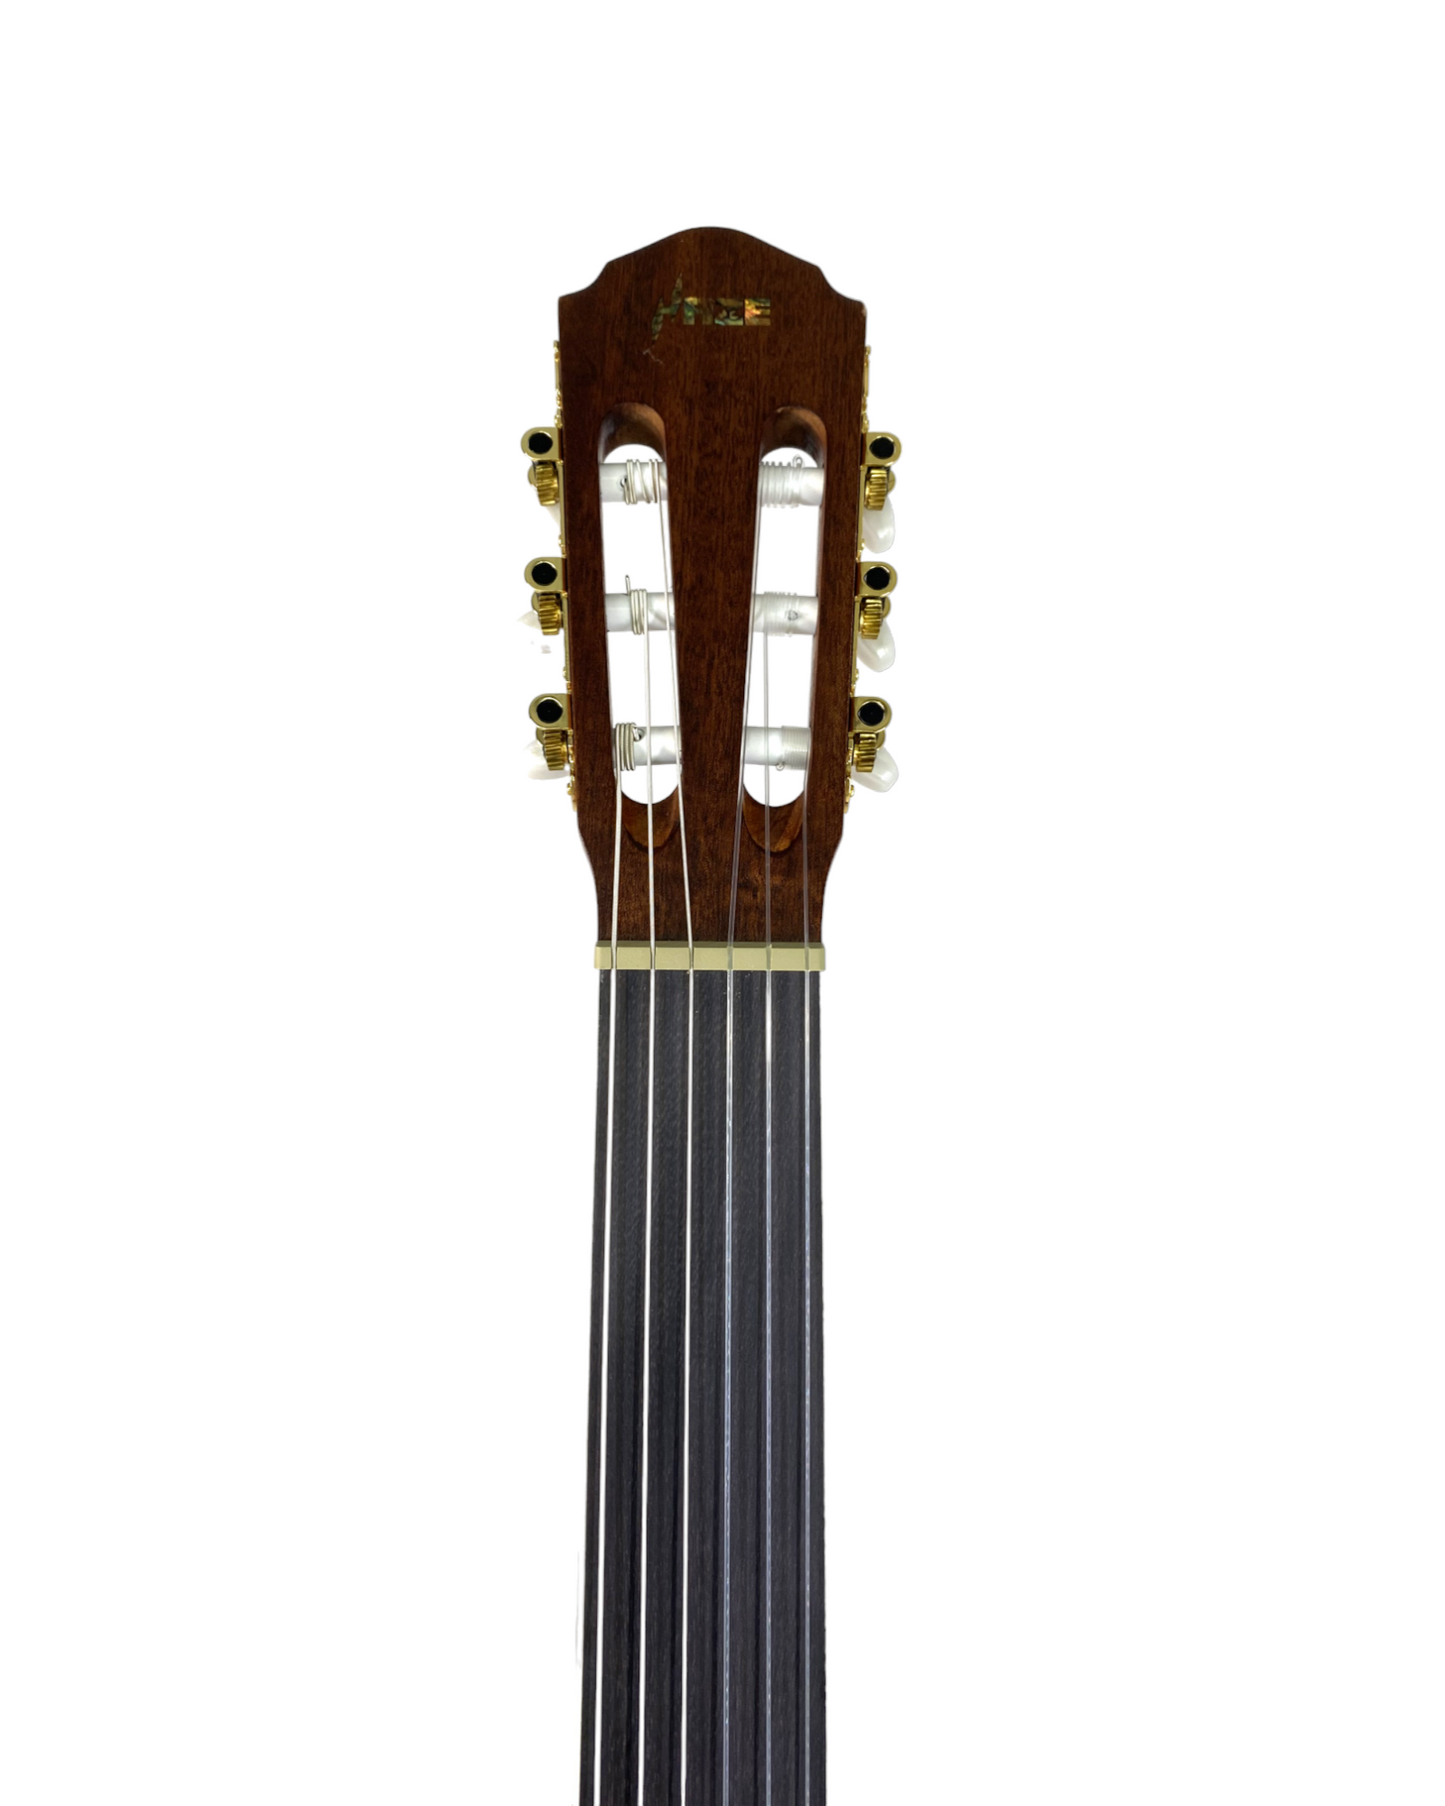 Haze Solid Top Fretless Arched Back Classical Guitar - Matte C551BCEQSMFL